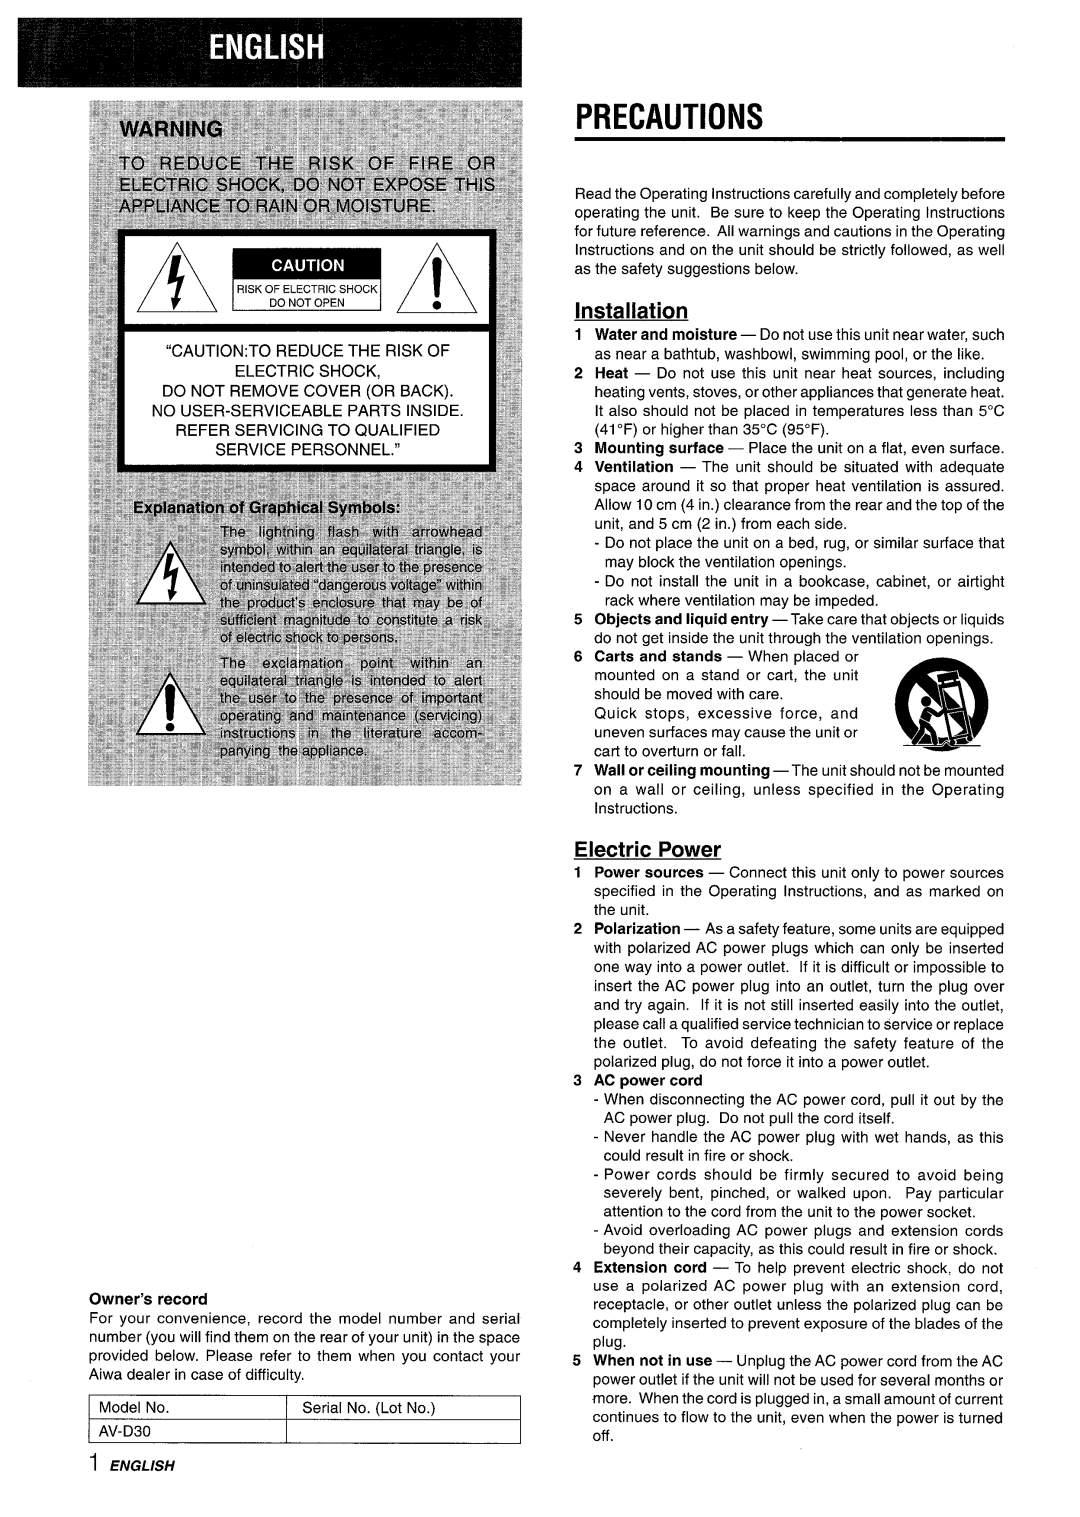 Aiwa AV-D30 manual Precautions, Installation, Electric Power, AC power cord, I English 